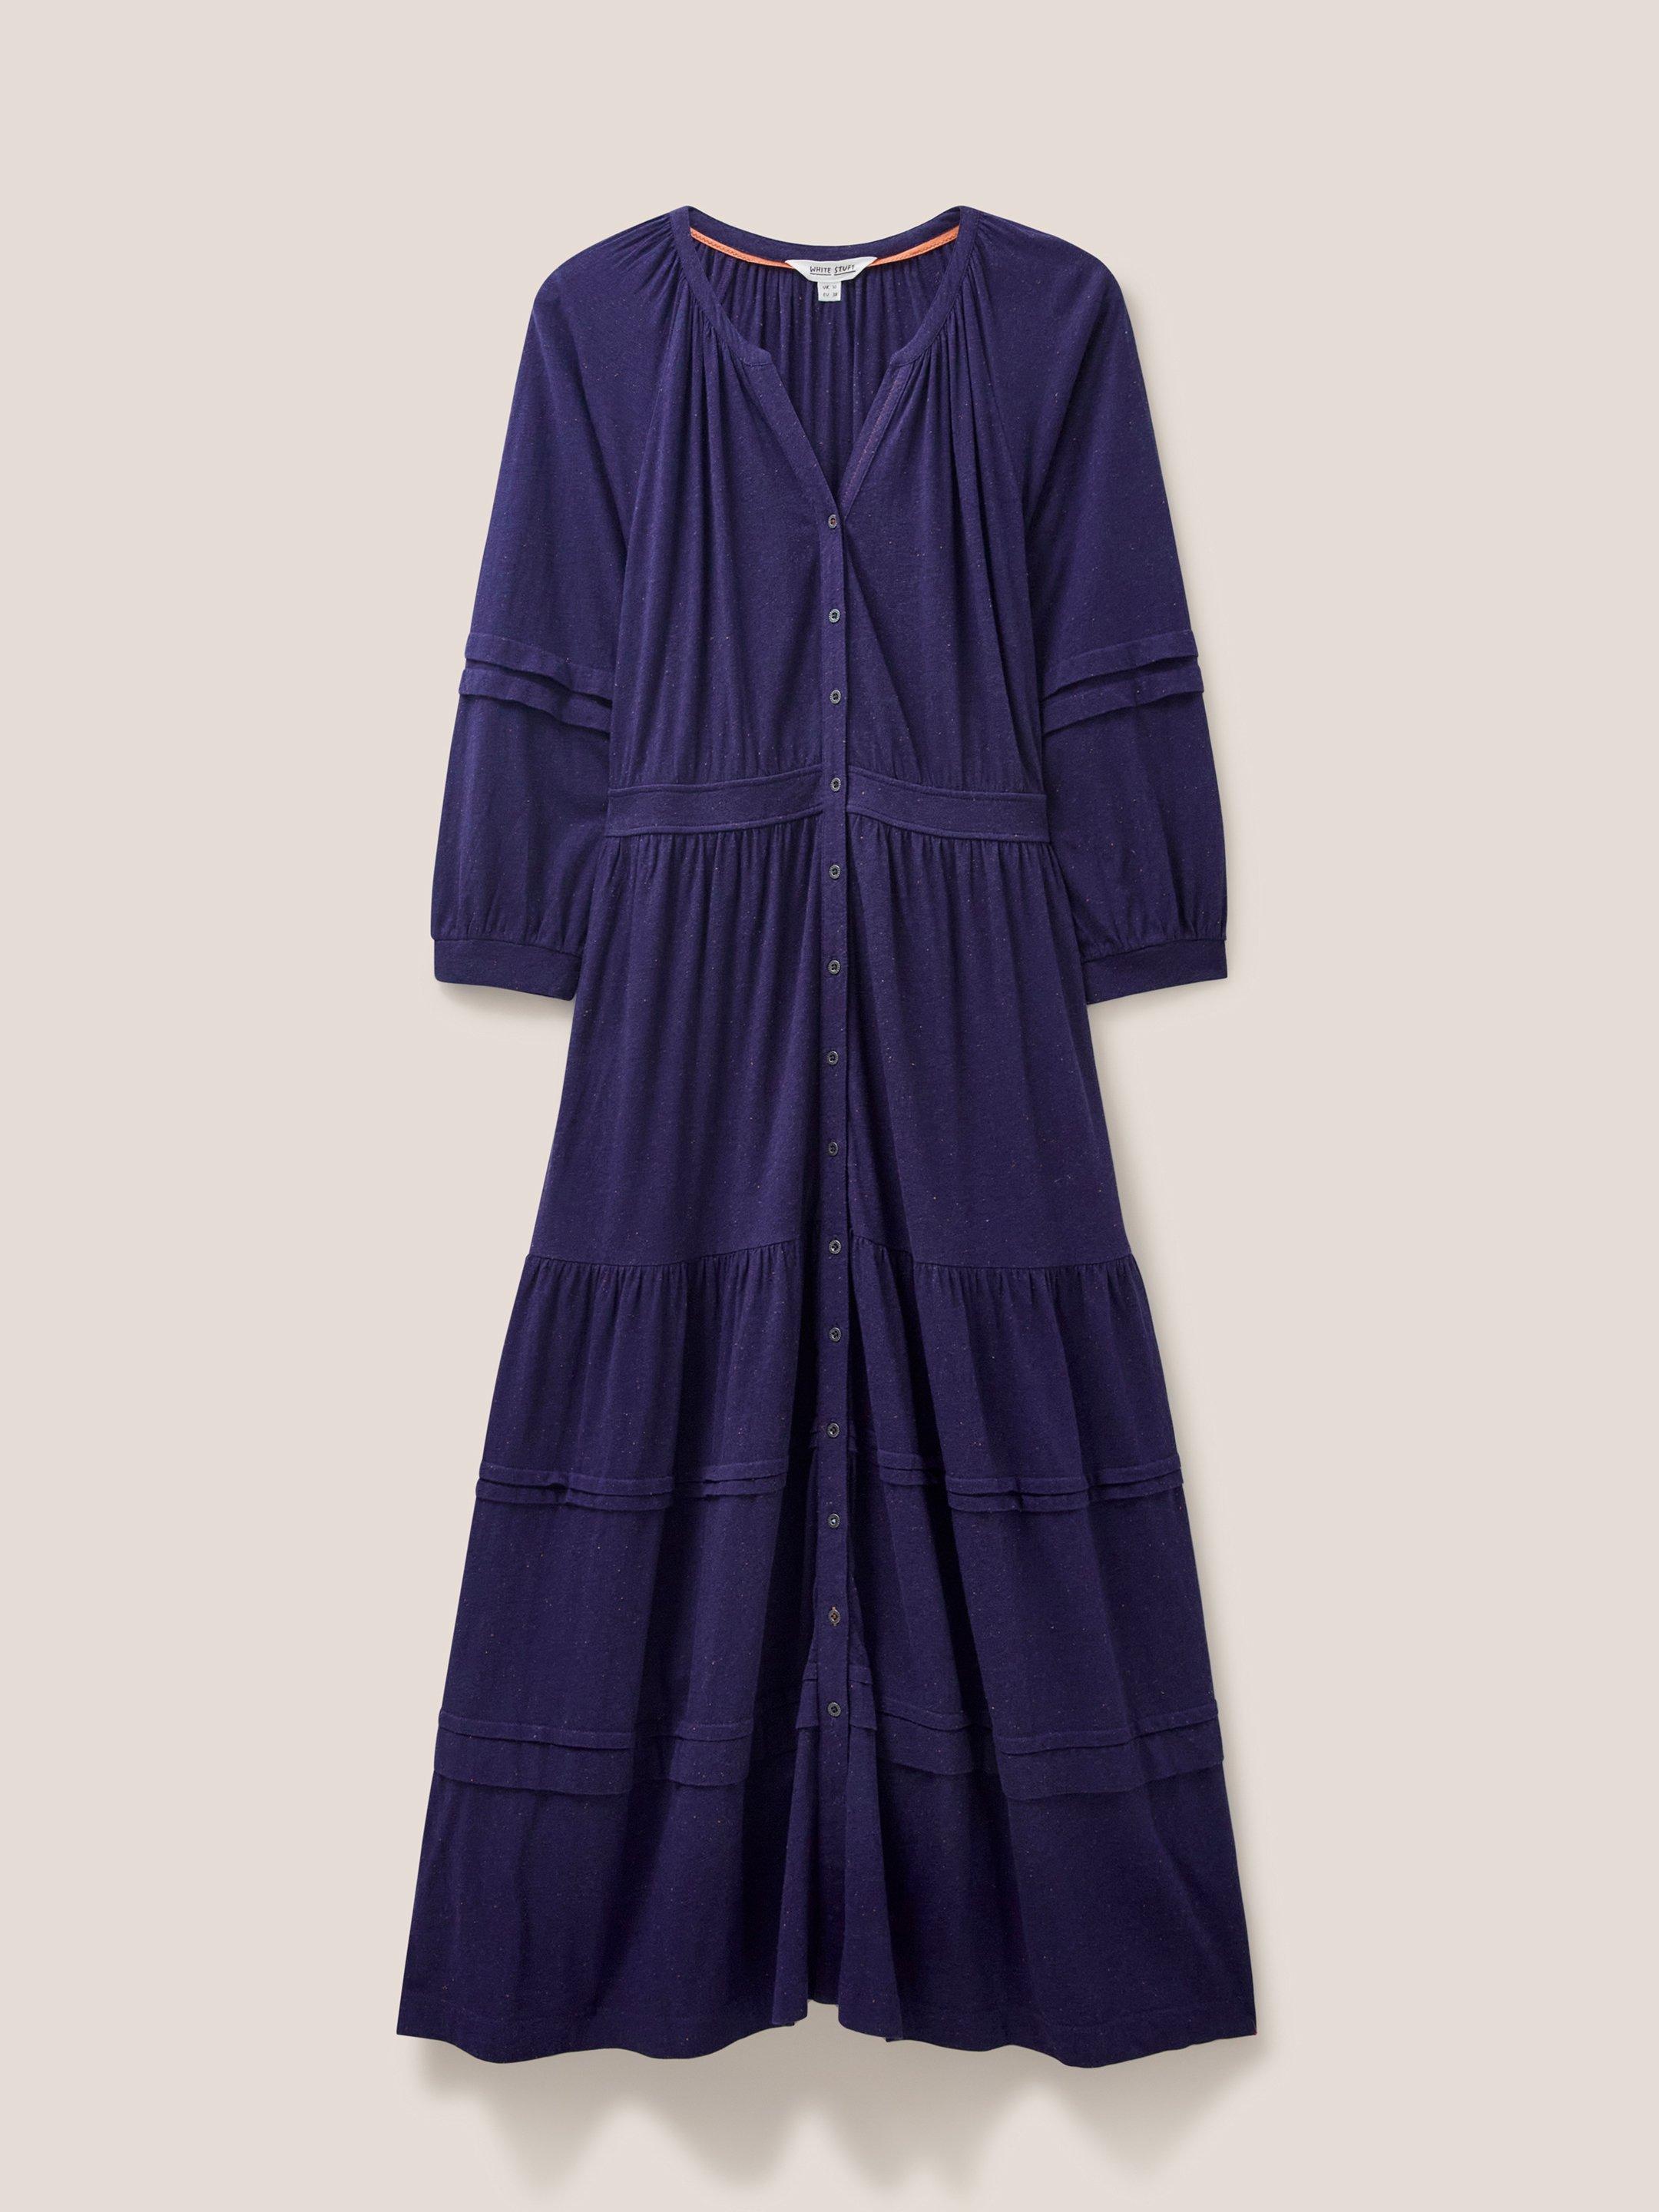 Hallie Soft Jersey Midi Dress in NAVY MULTI - FLAT FRONT